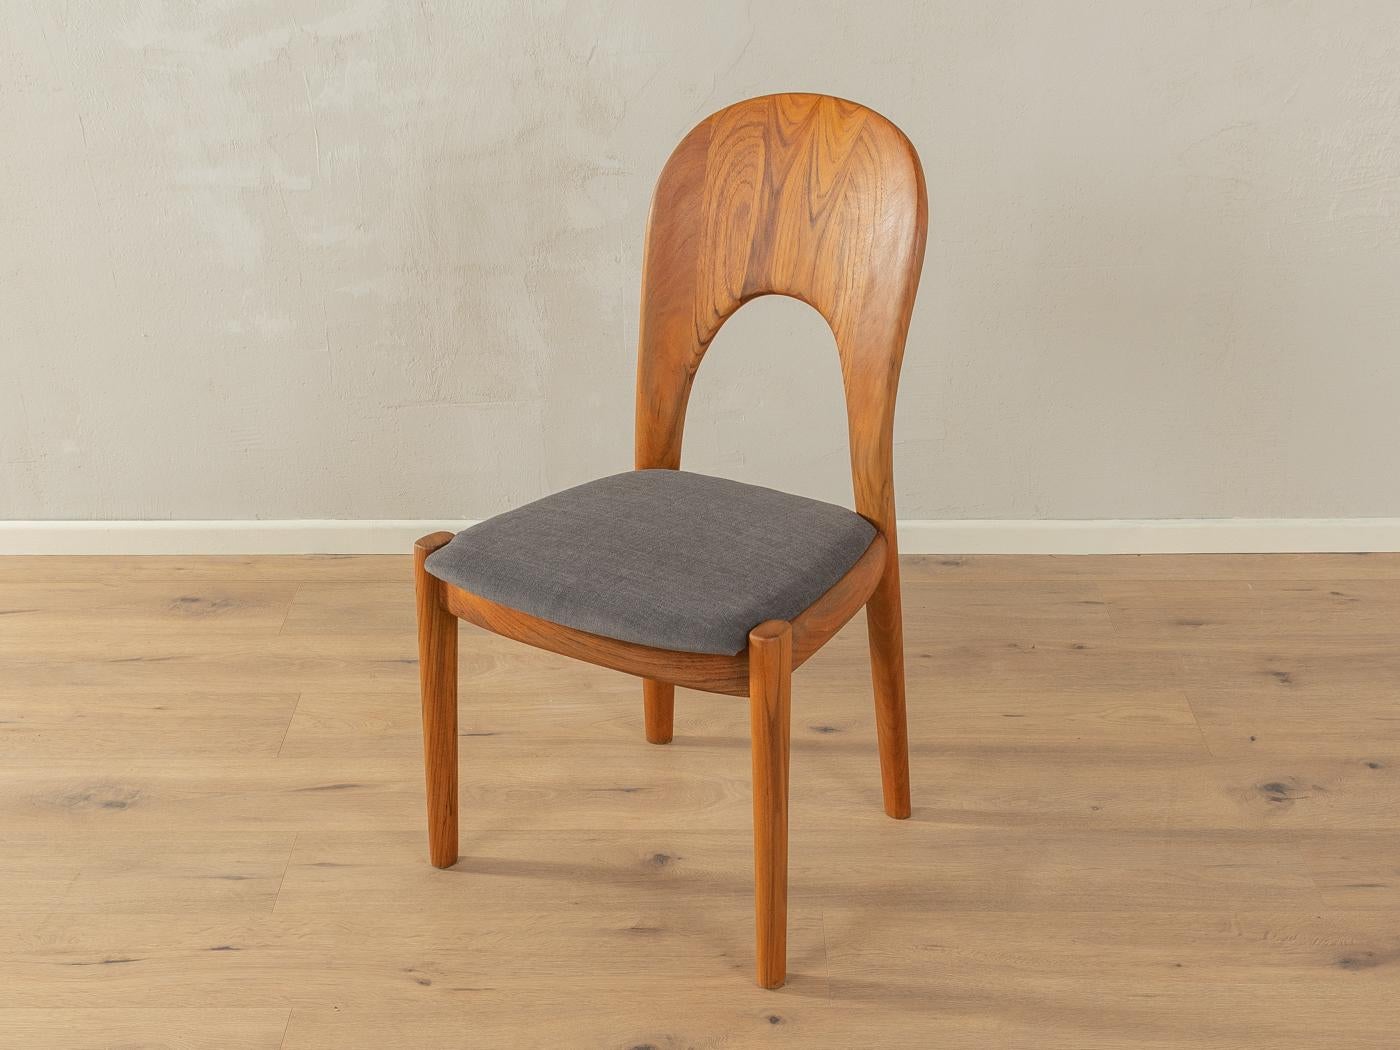 koefoeds hornslet chairs